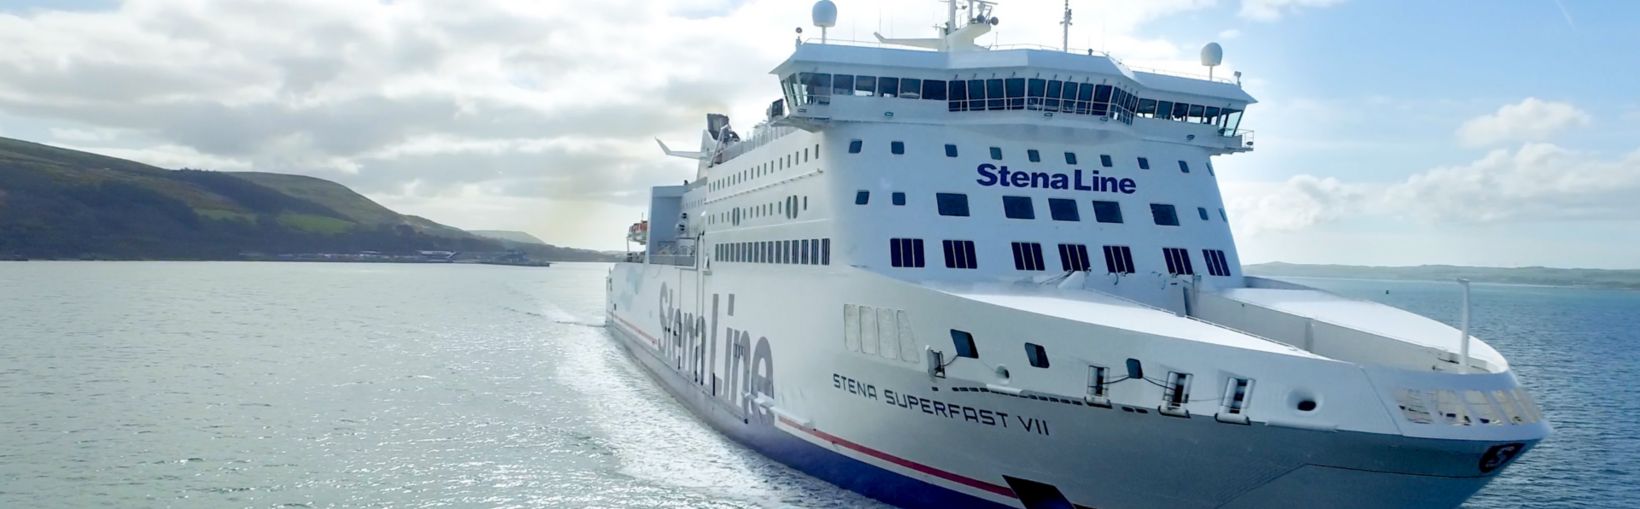 Stena Superfast VII ferry en el mar